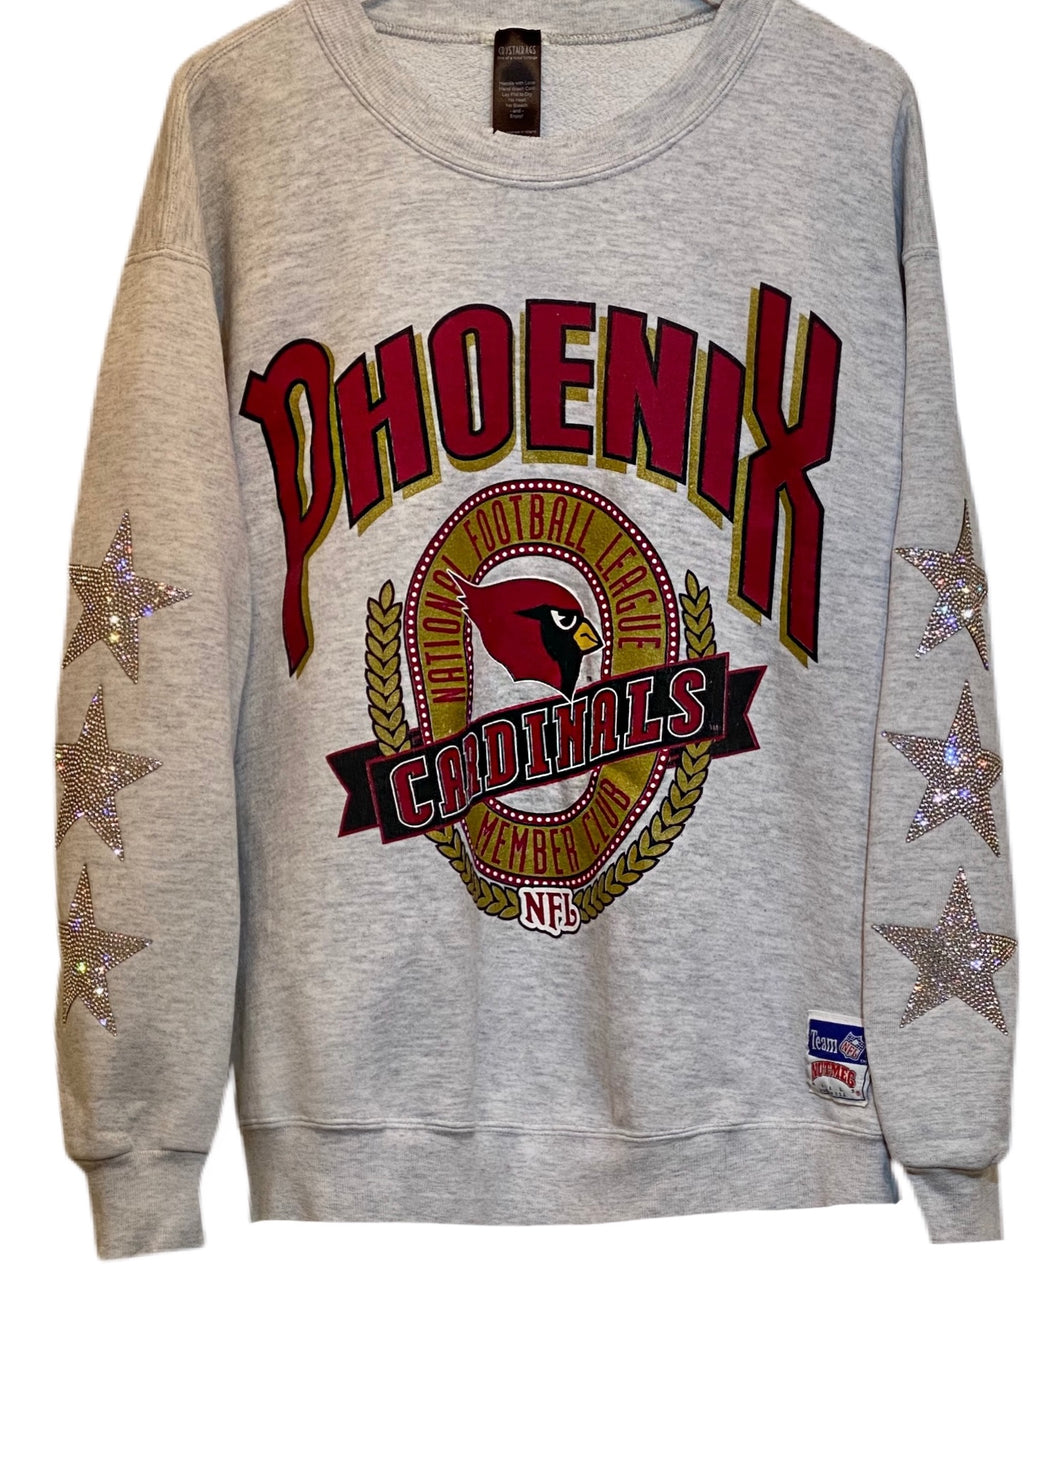 Arizona / Phoenix Cardinals, NFL One of a KIND “Rare Find” Vintage Sweatshirt with Three Crystal Star Design